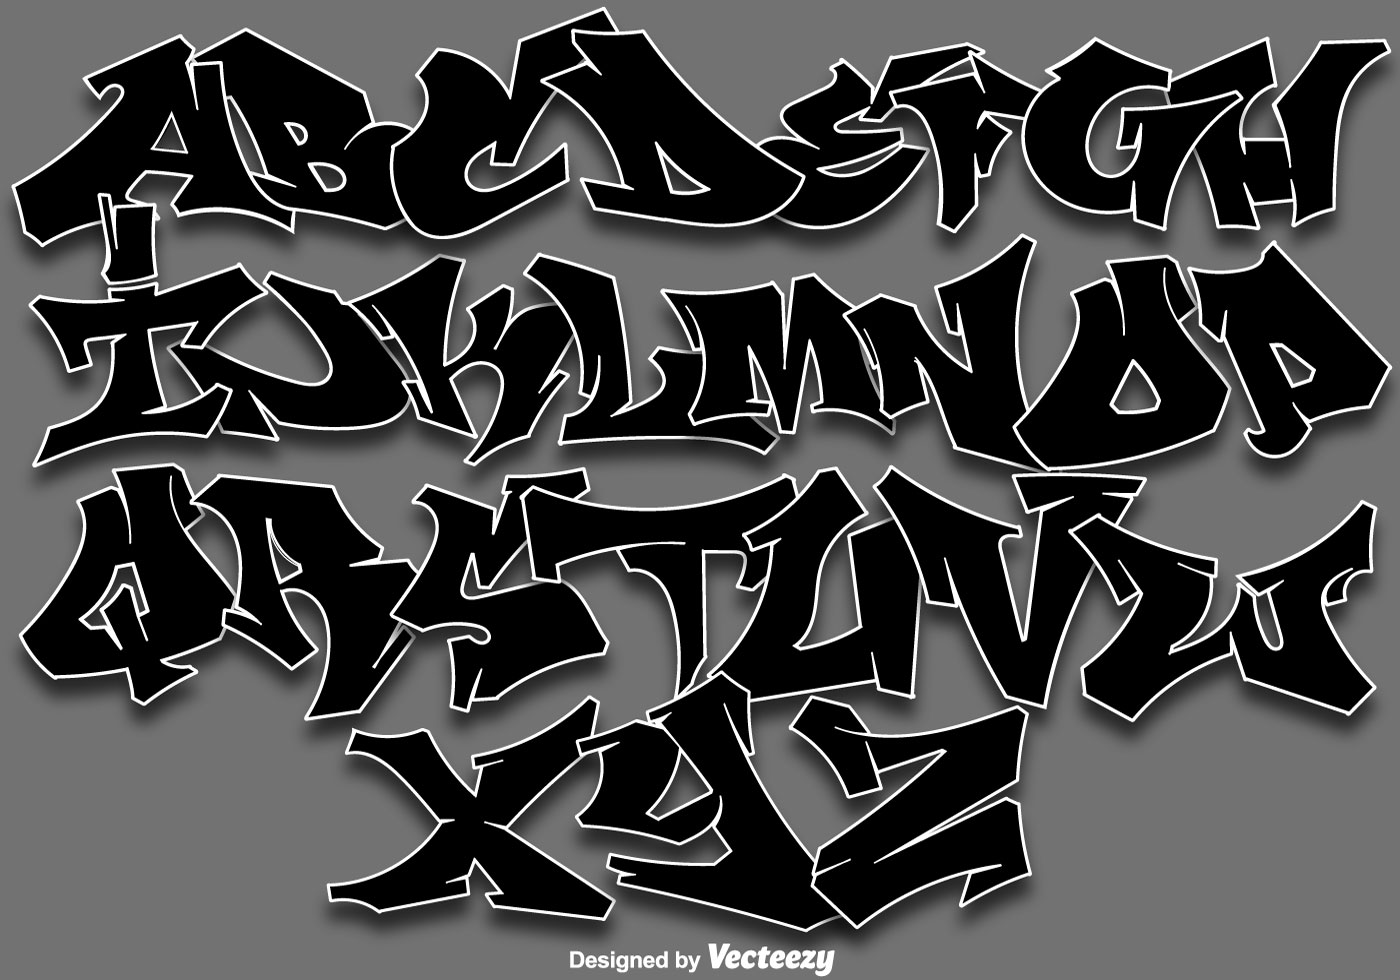 Imagenes De Letras De Graffiti Abecedario De Graffiti A Z Letras Porn